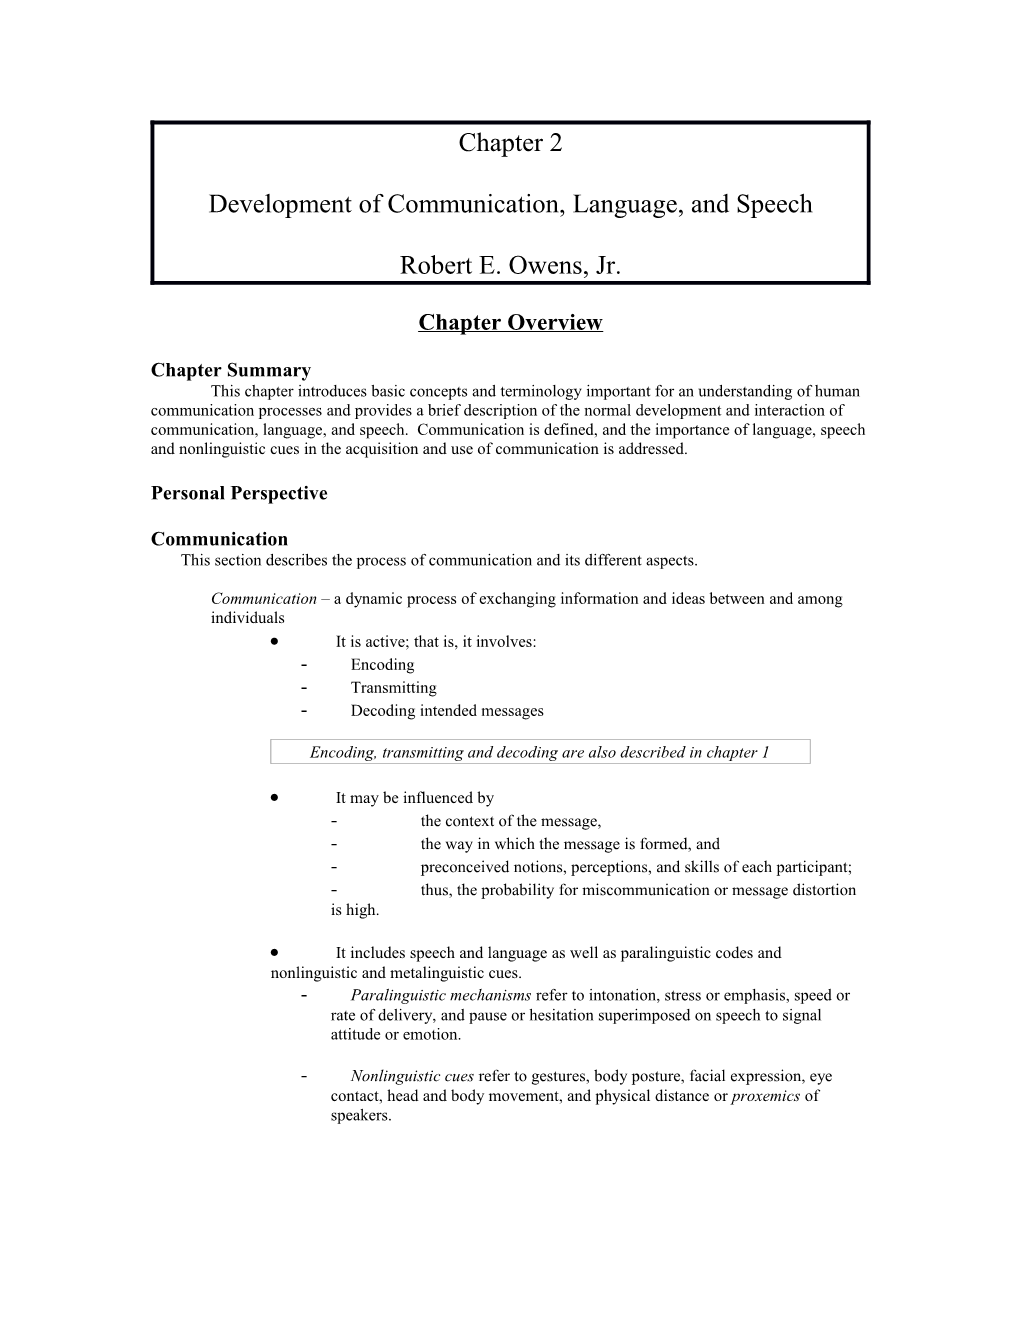 Development of Communication, Language, and Speech